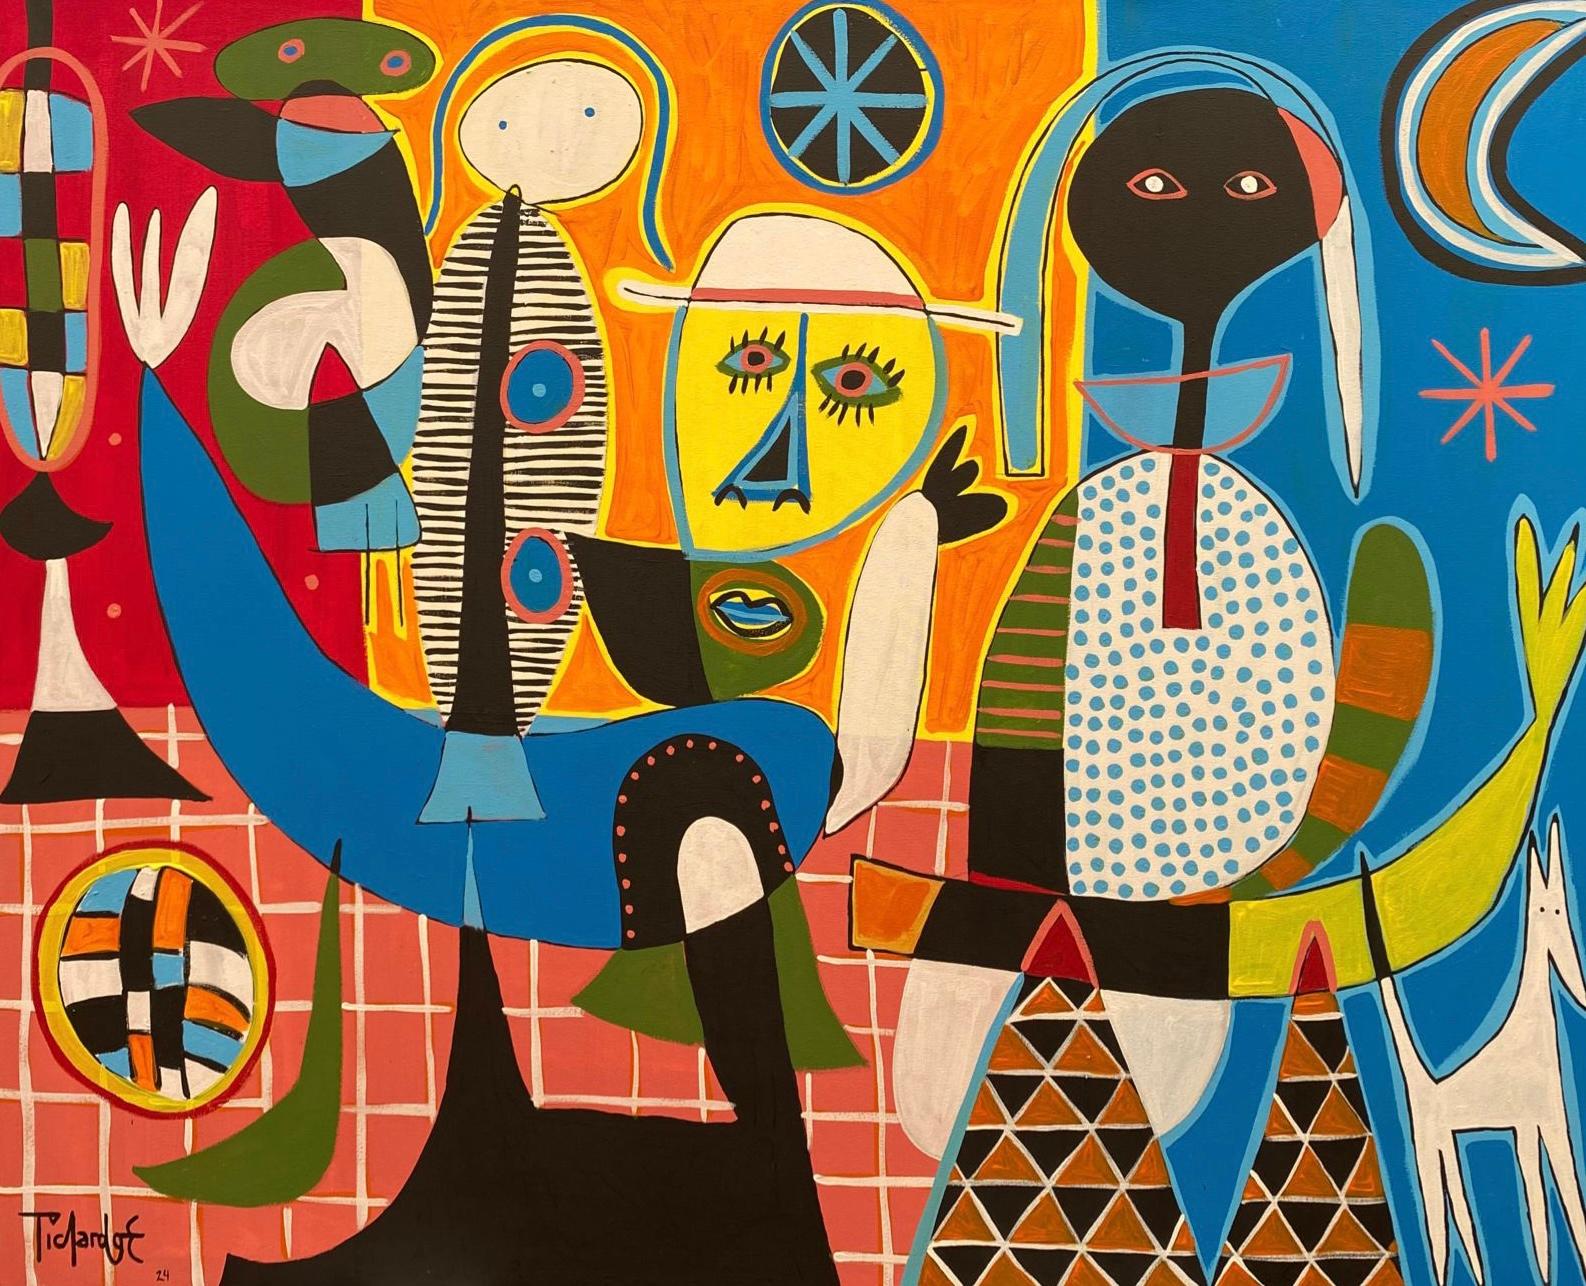 Contemporary Art, Abstract Painting
Acrylic on canvas
130x160cm
Signed 




About the artist
Enrique Pichardo (Mexico City, 1973) graduated from Escuela Nacional de Pintura, Escultura y Grabado (ENPEG) “La Esmeralda”. As a Mexican Contemporary